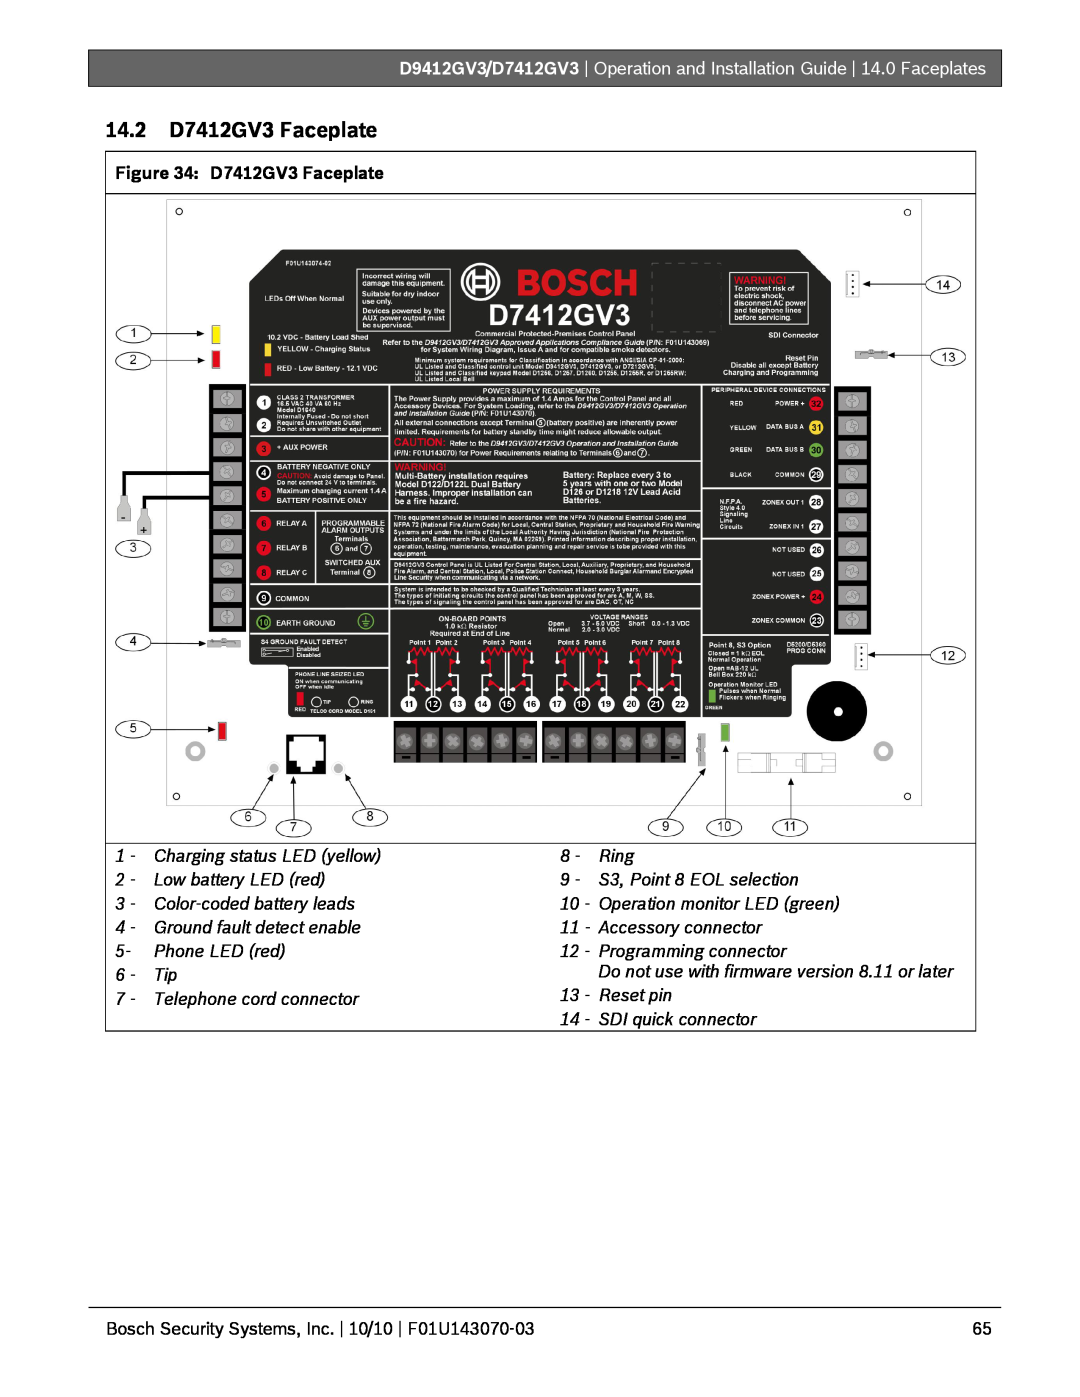 Bosch Appliances D9412GV3 manual 14.2D7412GV3 Faceplate 